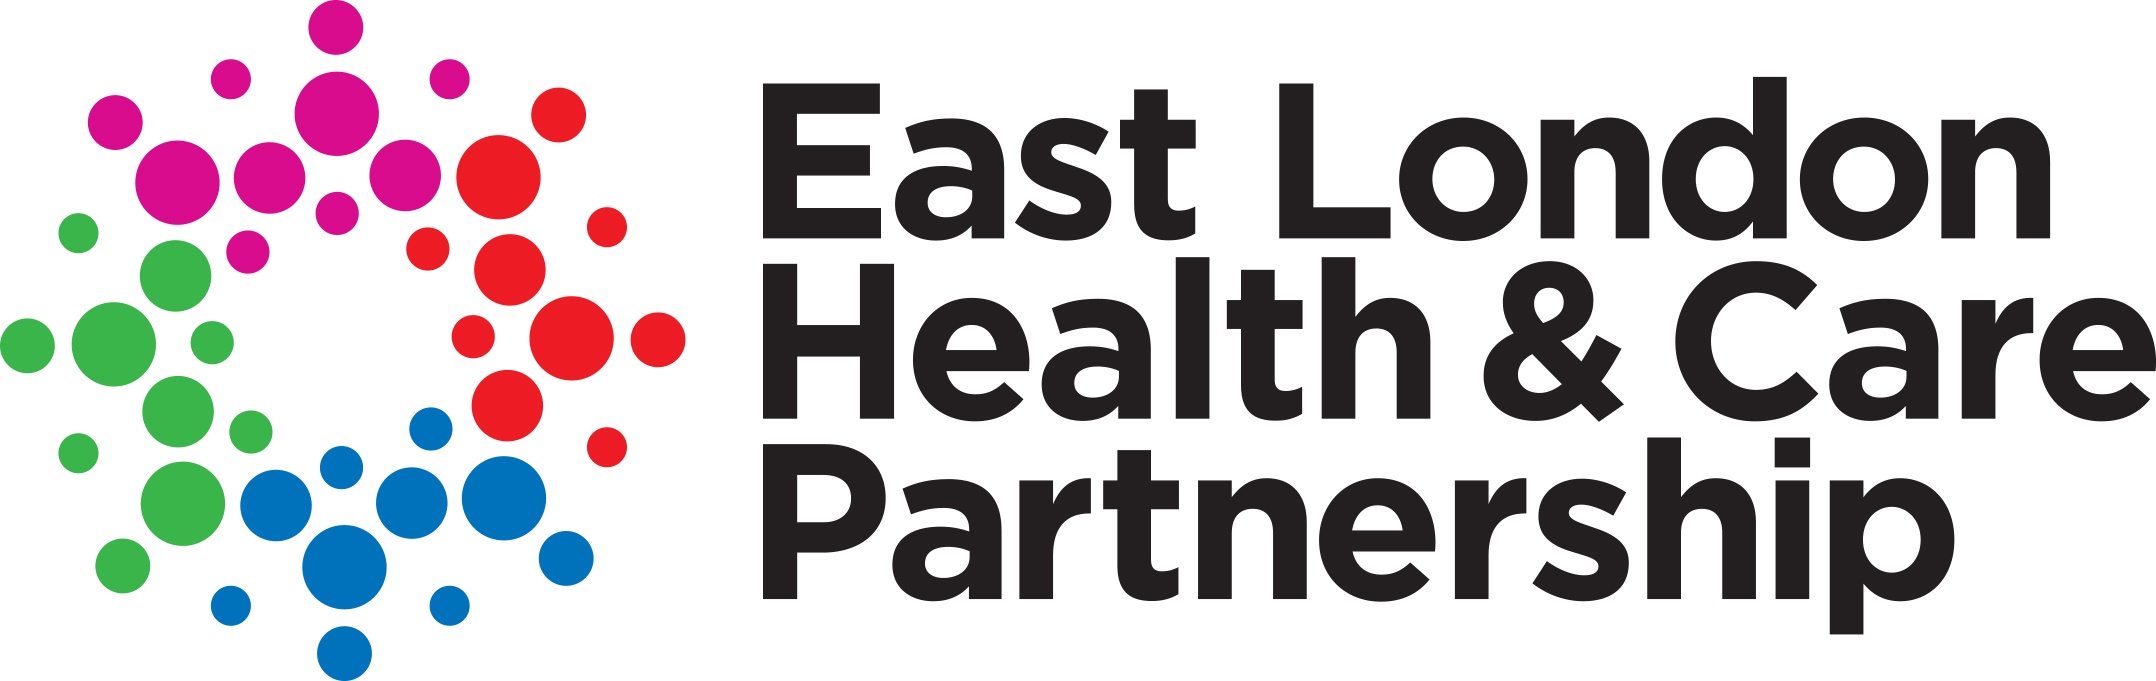 East London health and care partnership logo